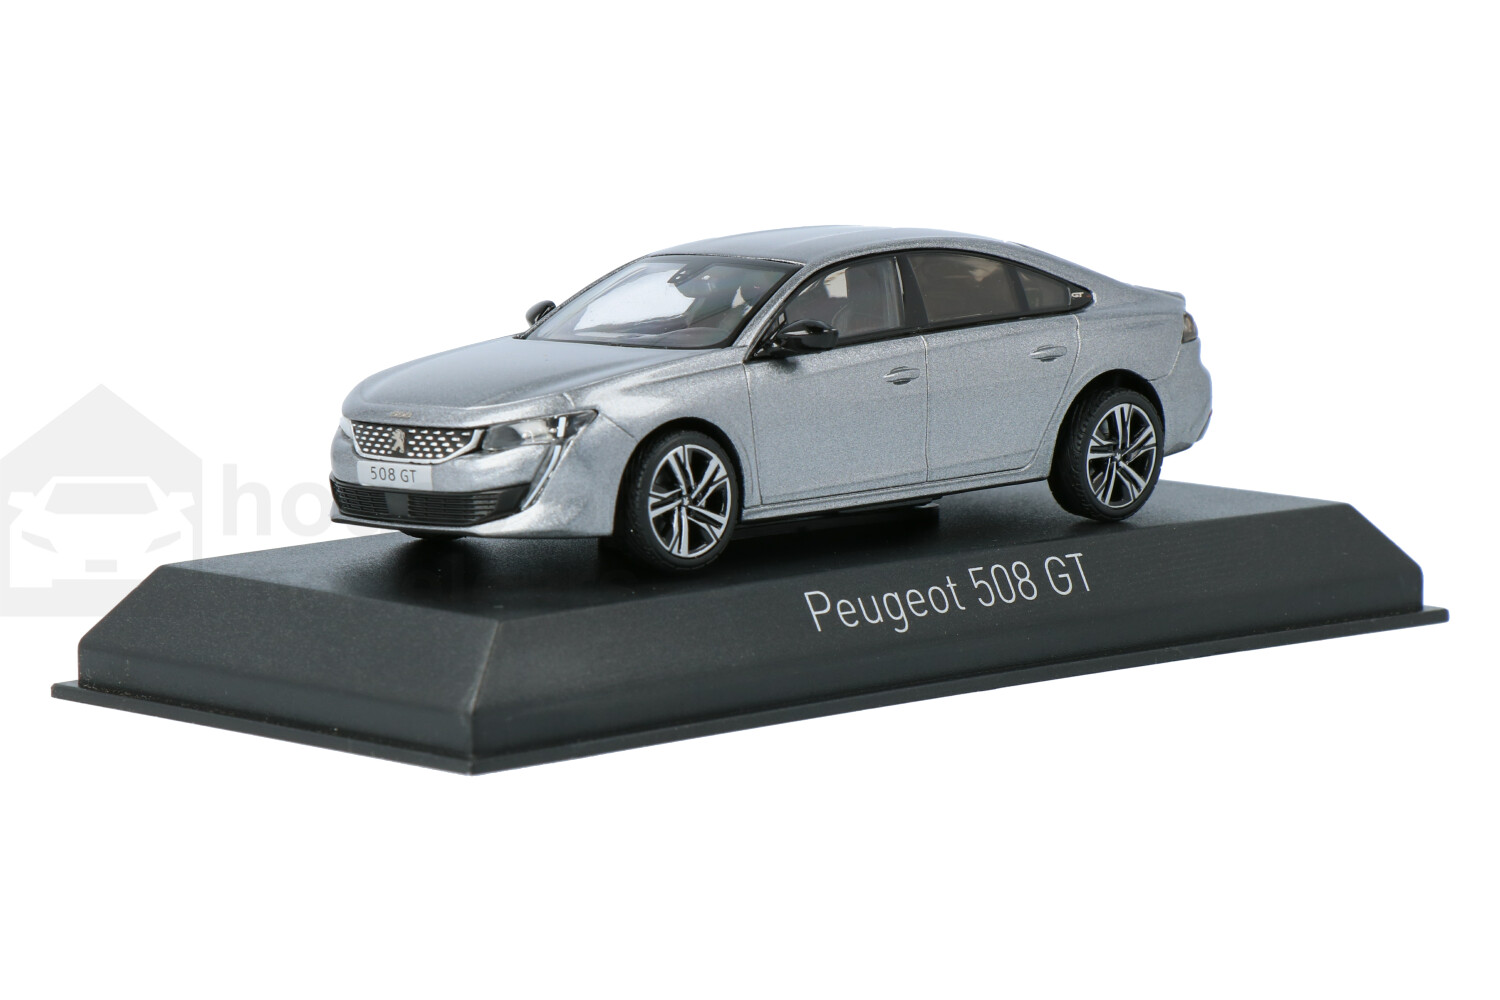 Peugeot-508-GT-475822_13153551094758225-NorevPeugeot-508-GT-475822_Houseofmodelcars_.jpg